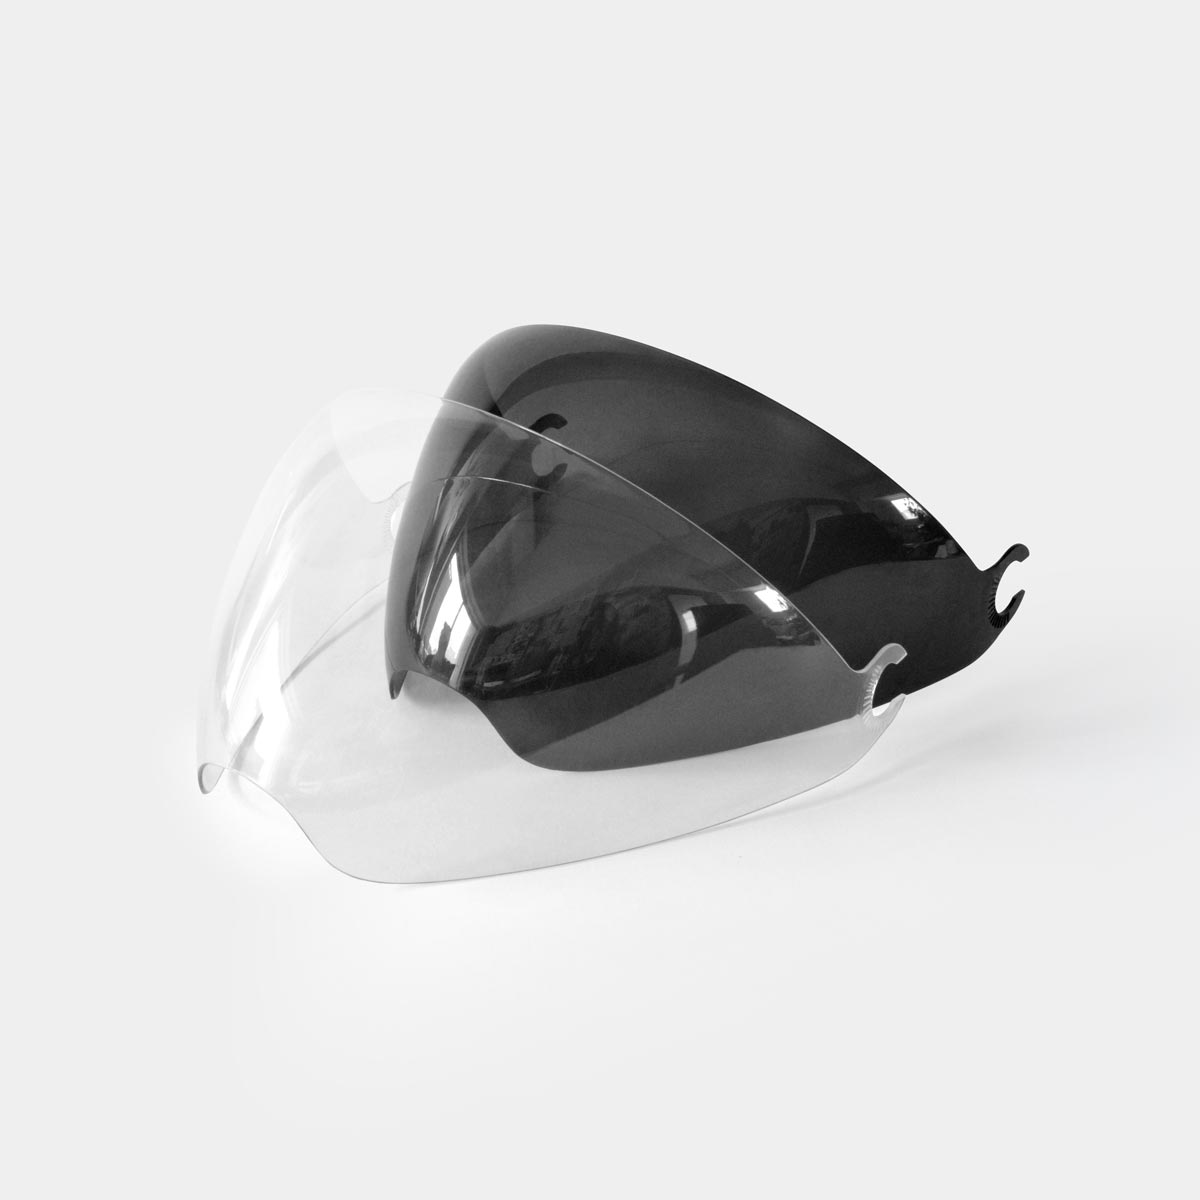 Crosshelmet X1 日本智能摩托车头盔原装进口 透明/黑色挡风板